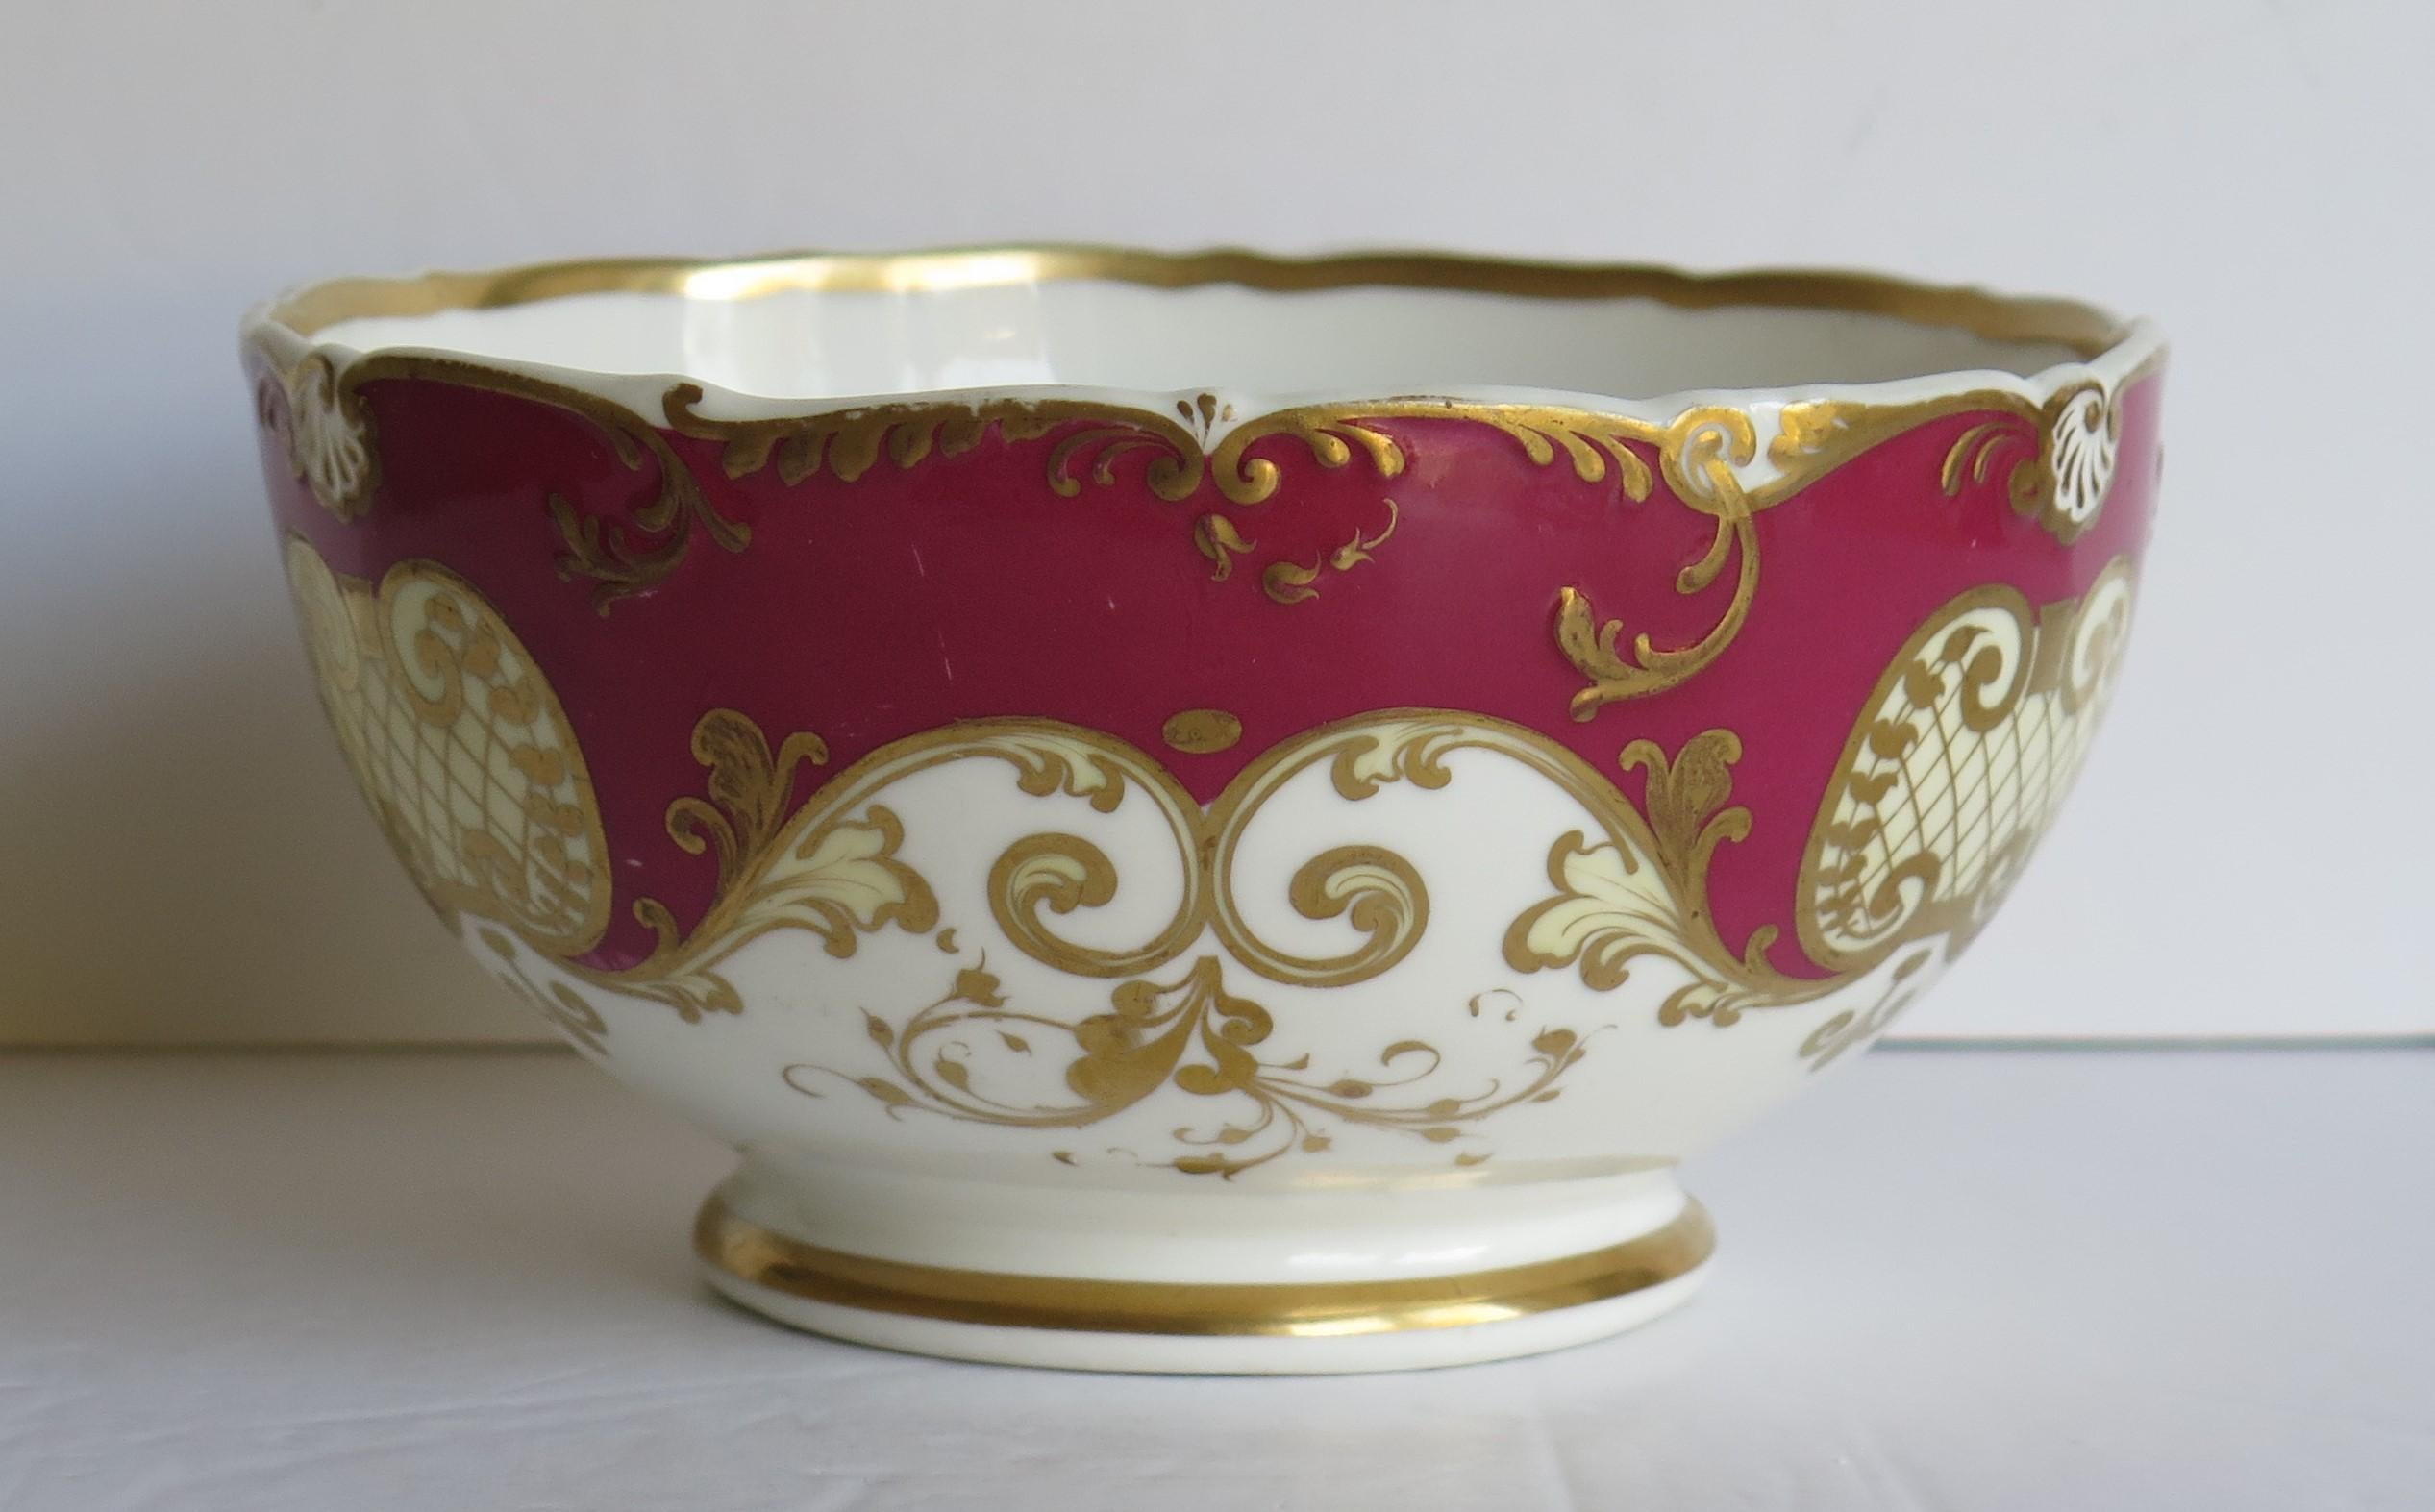 19th Century Fine H & R Daniel Porcelain Slop Bowl in Recorded Pattern 4789, circa 1830